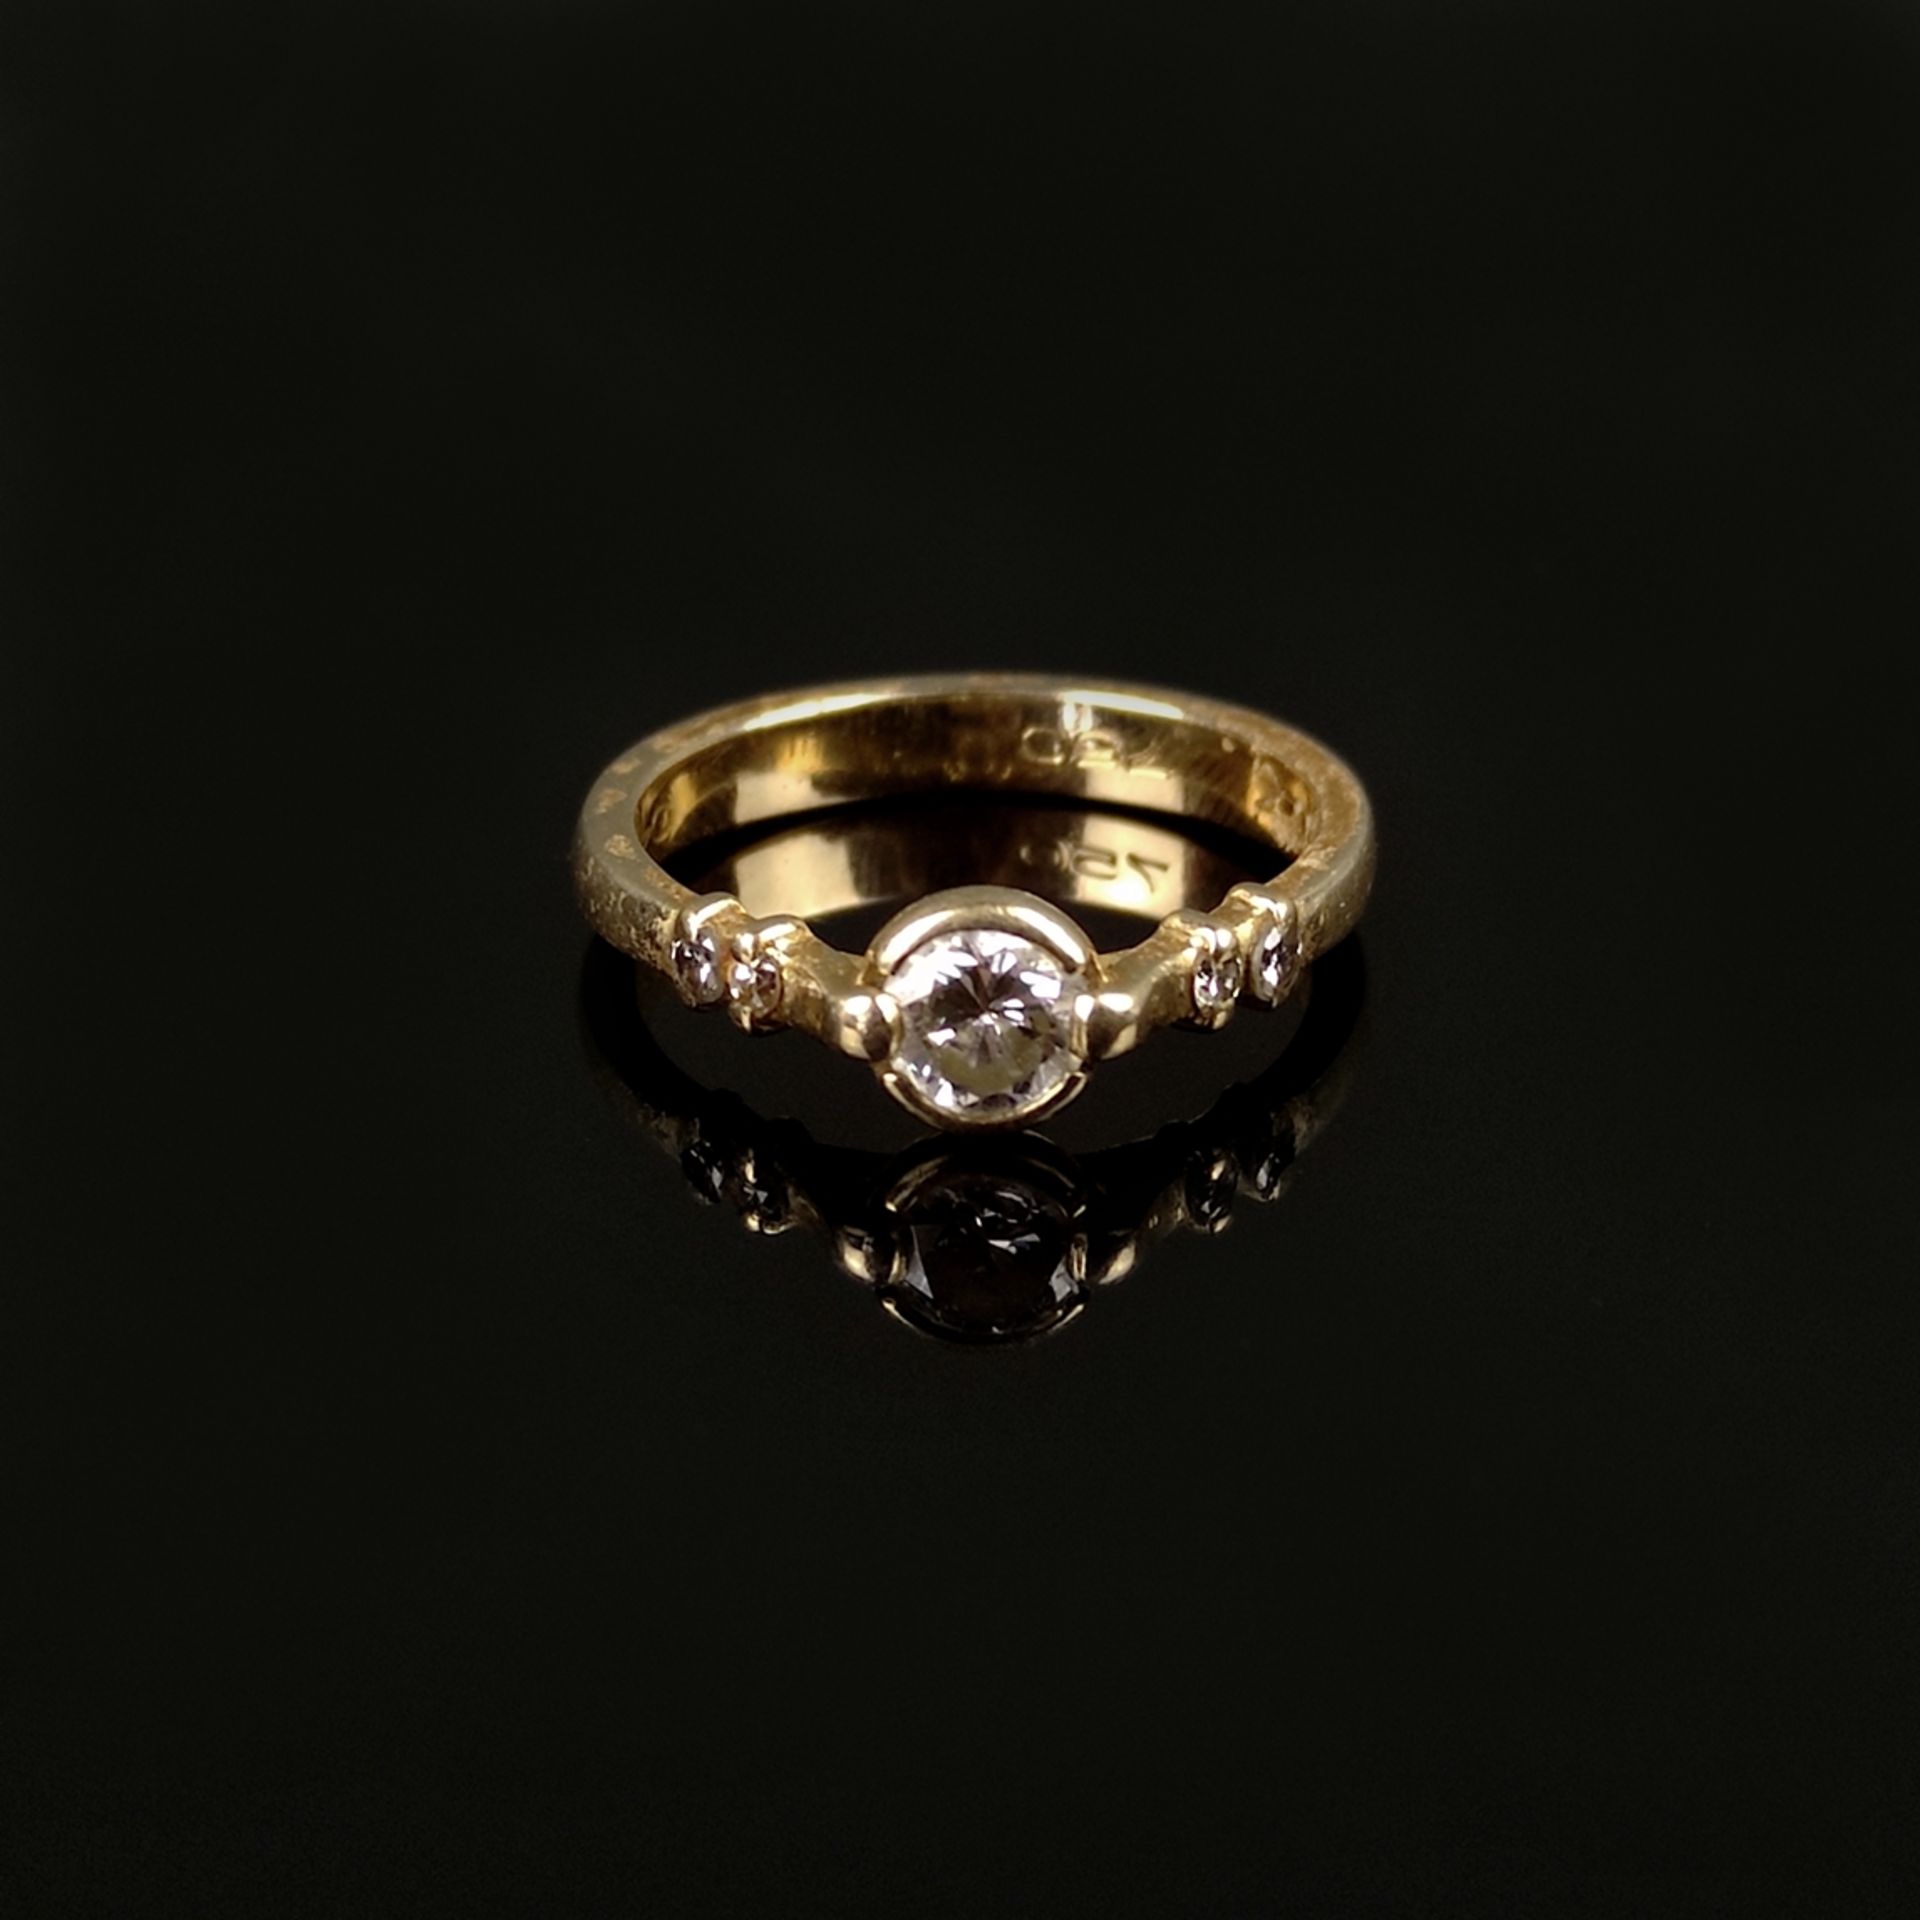 Diamant Ring, 750/18K Gelbgold (punziert), 3,52g, mittig Diamant um 0,43ct., beidseitig je 2 Diaman - Bild 2 aus 4